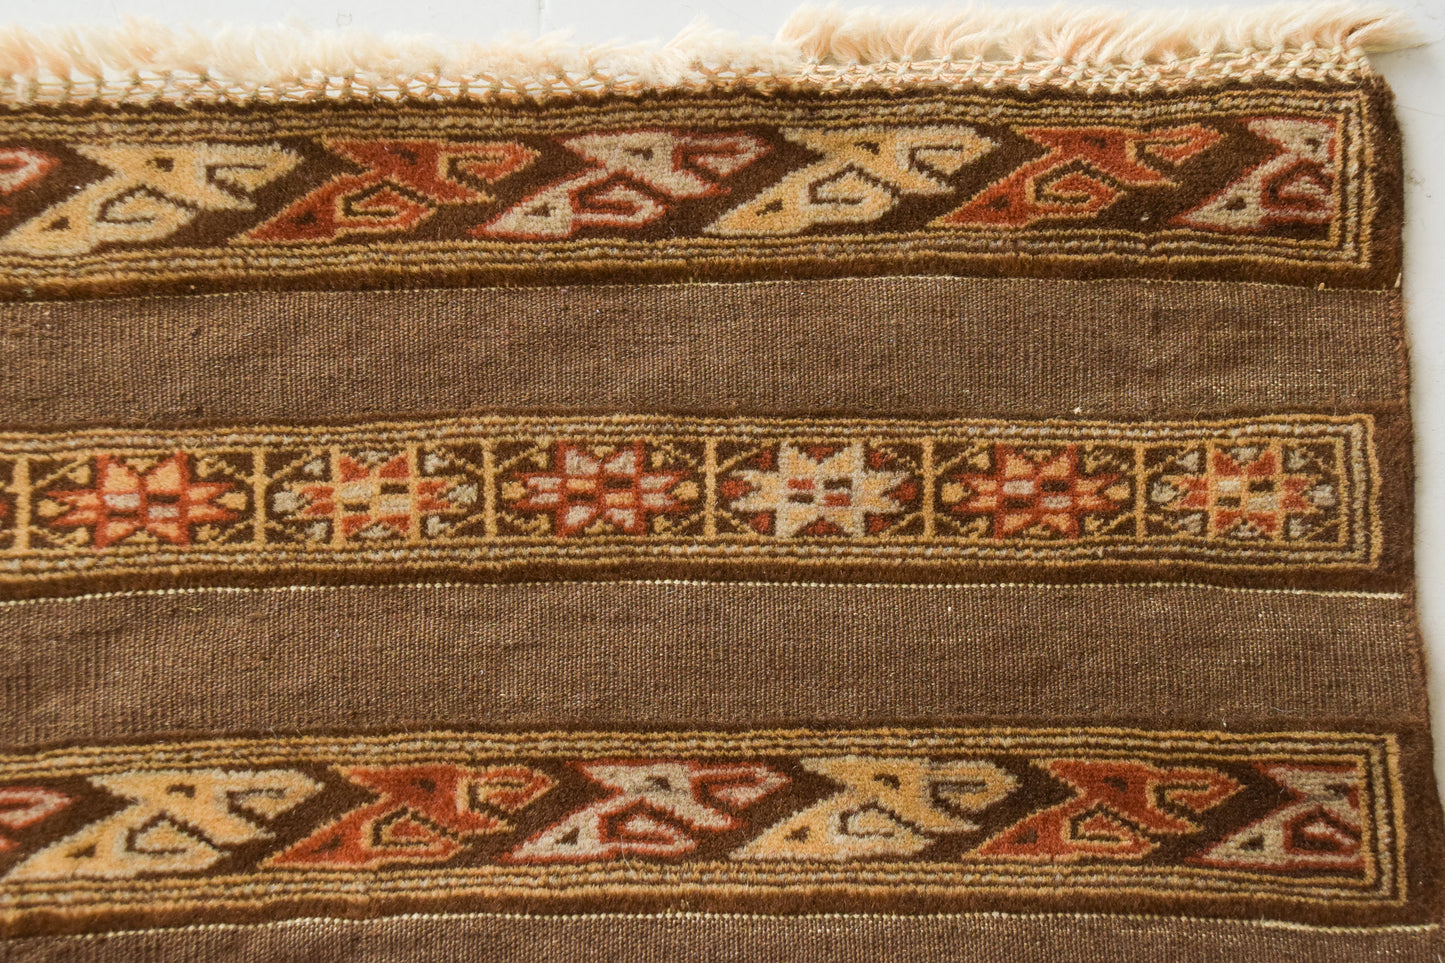 Interesting Horizontal Patterned Handmade Rug (Shiraz, Iran)